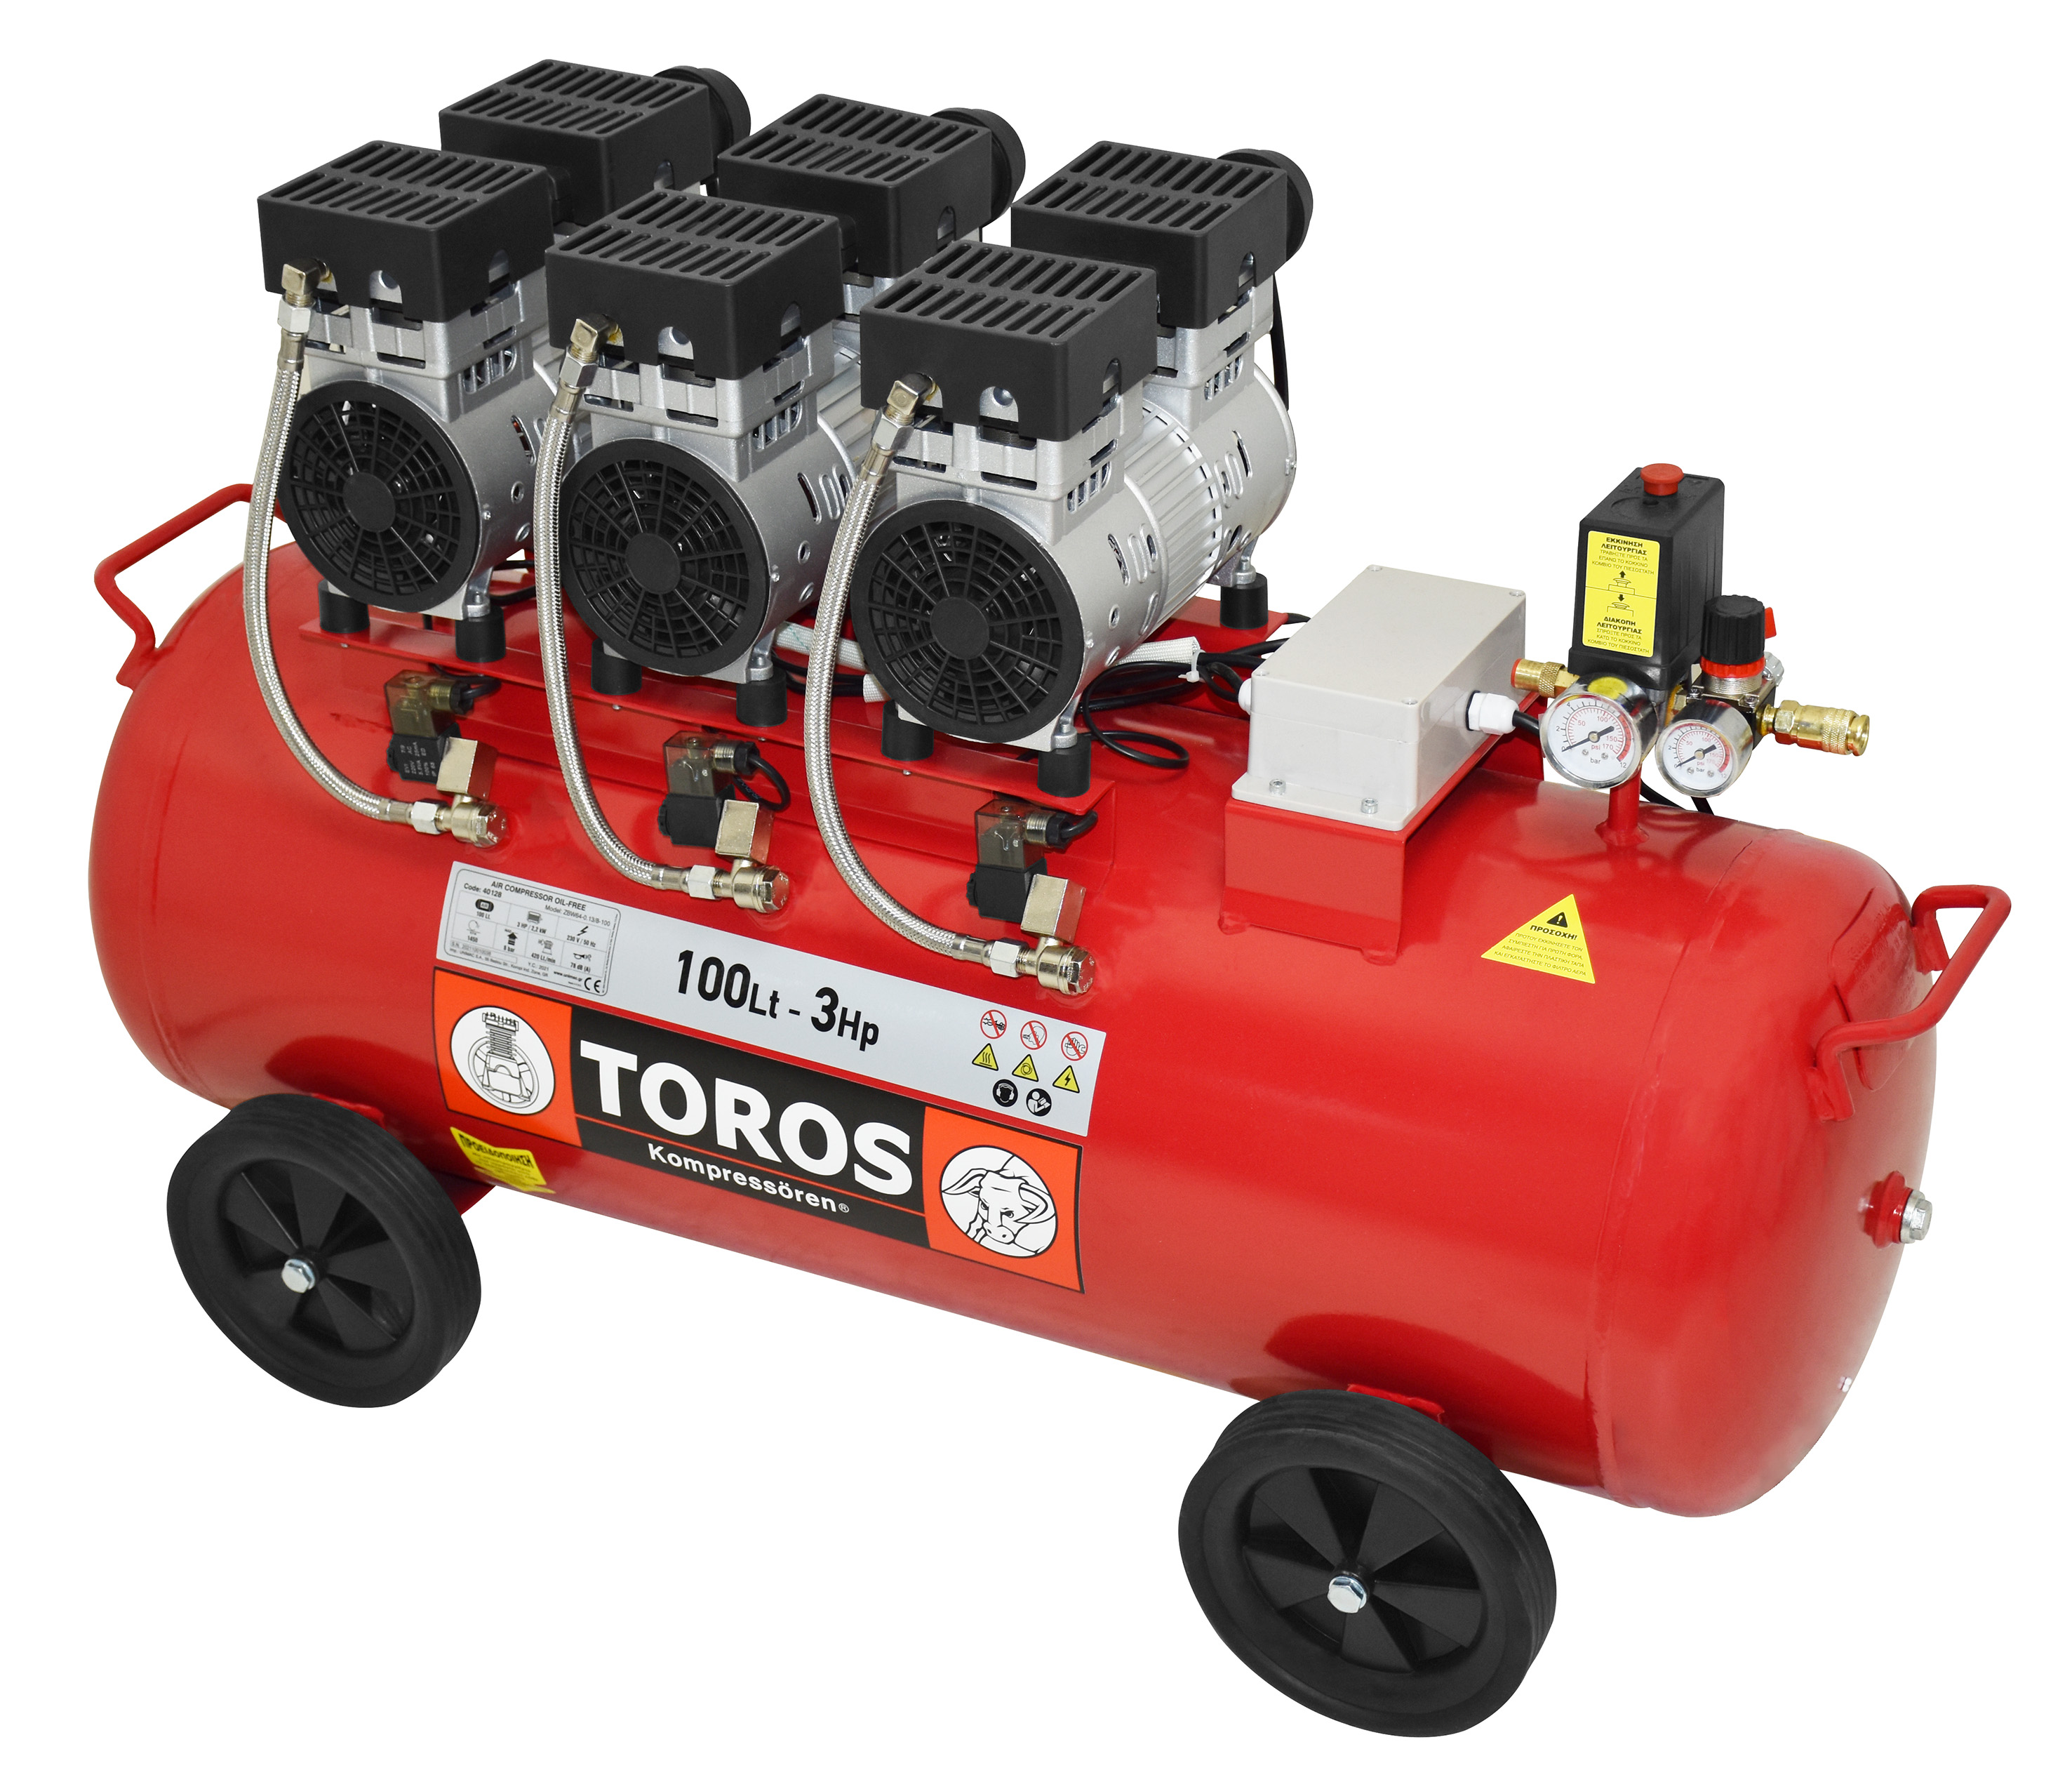 Aircompressor 3HP/100Lt OilFree Toros - 3